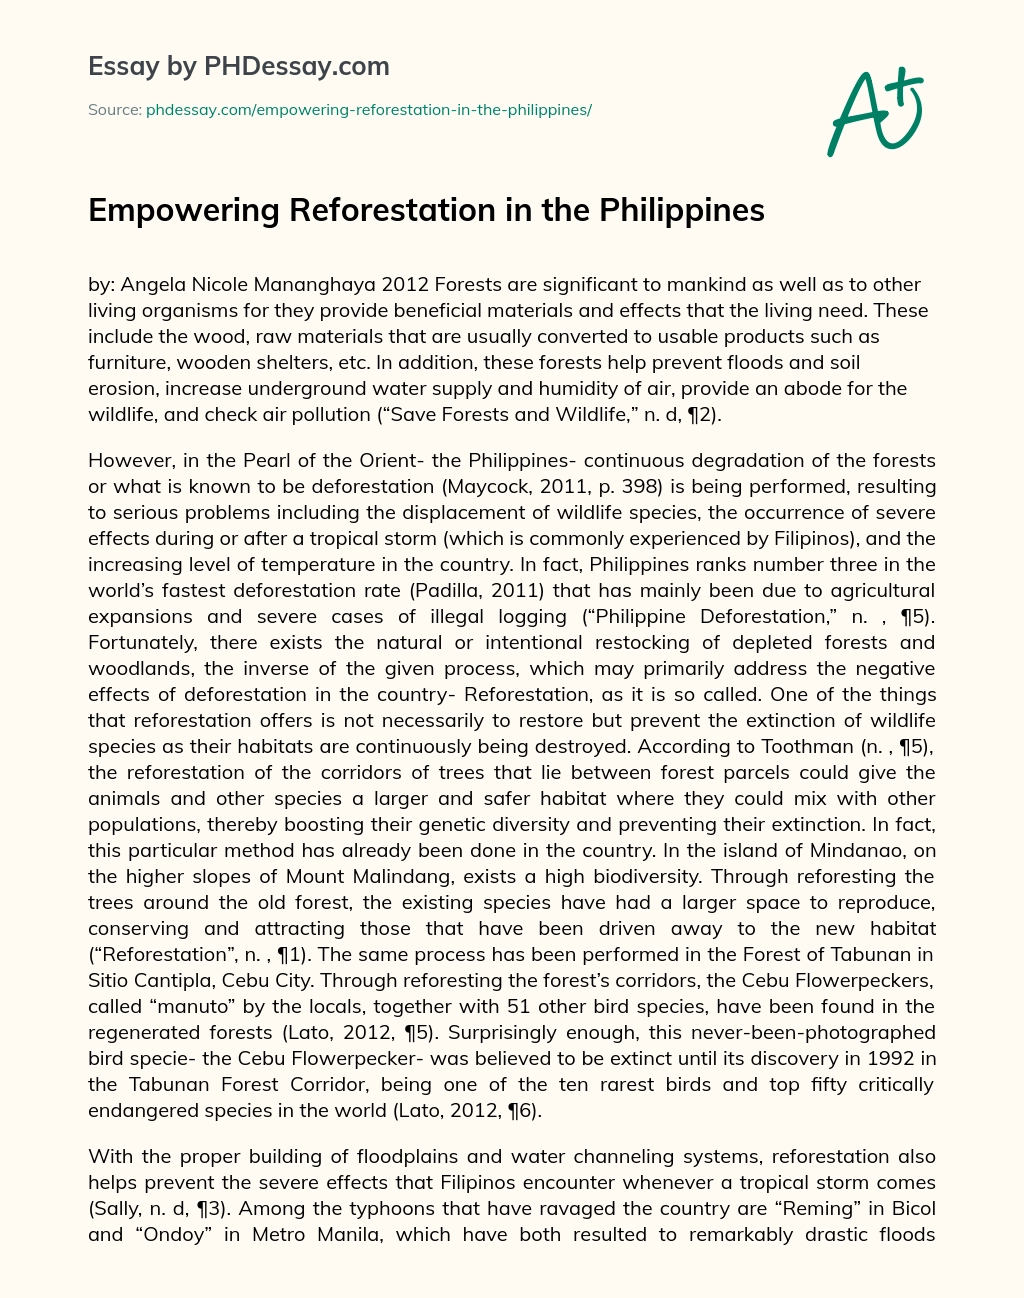 Empowering Reforestation in the Philippines essay